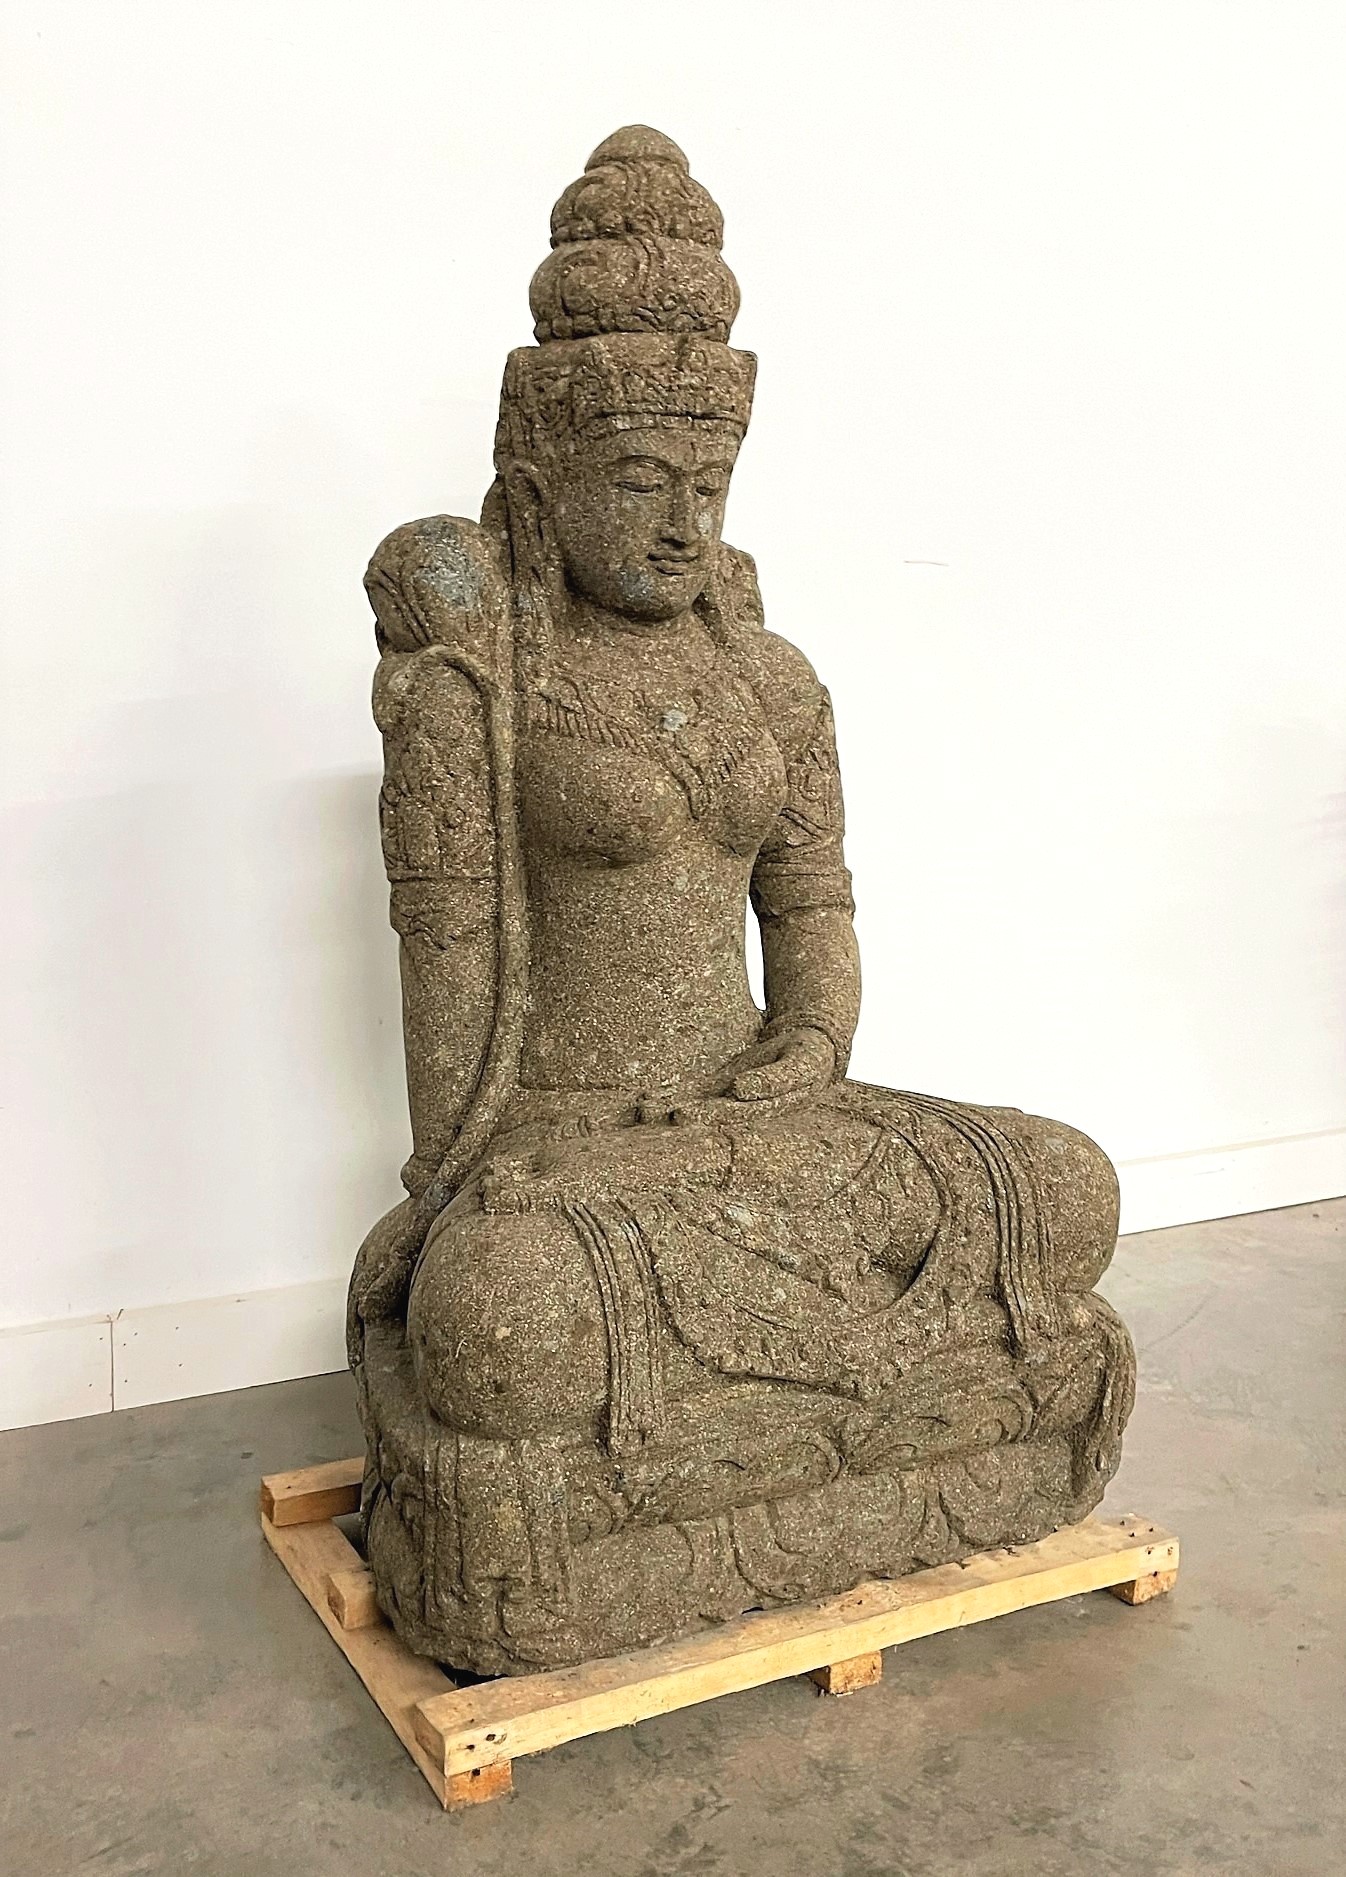 Large Carved Stone Tara Statue